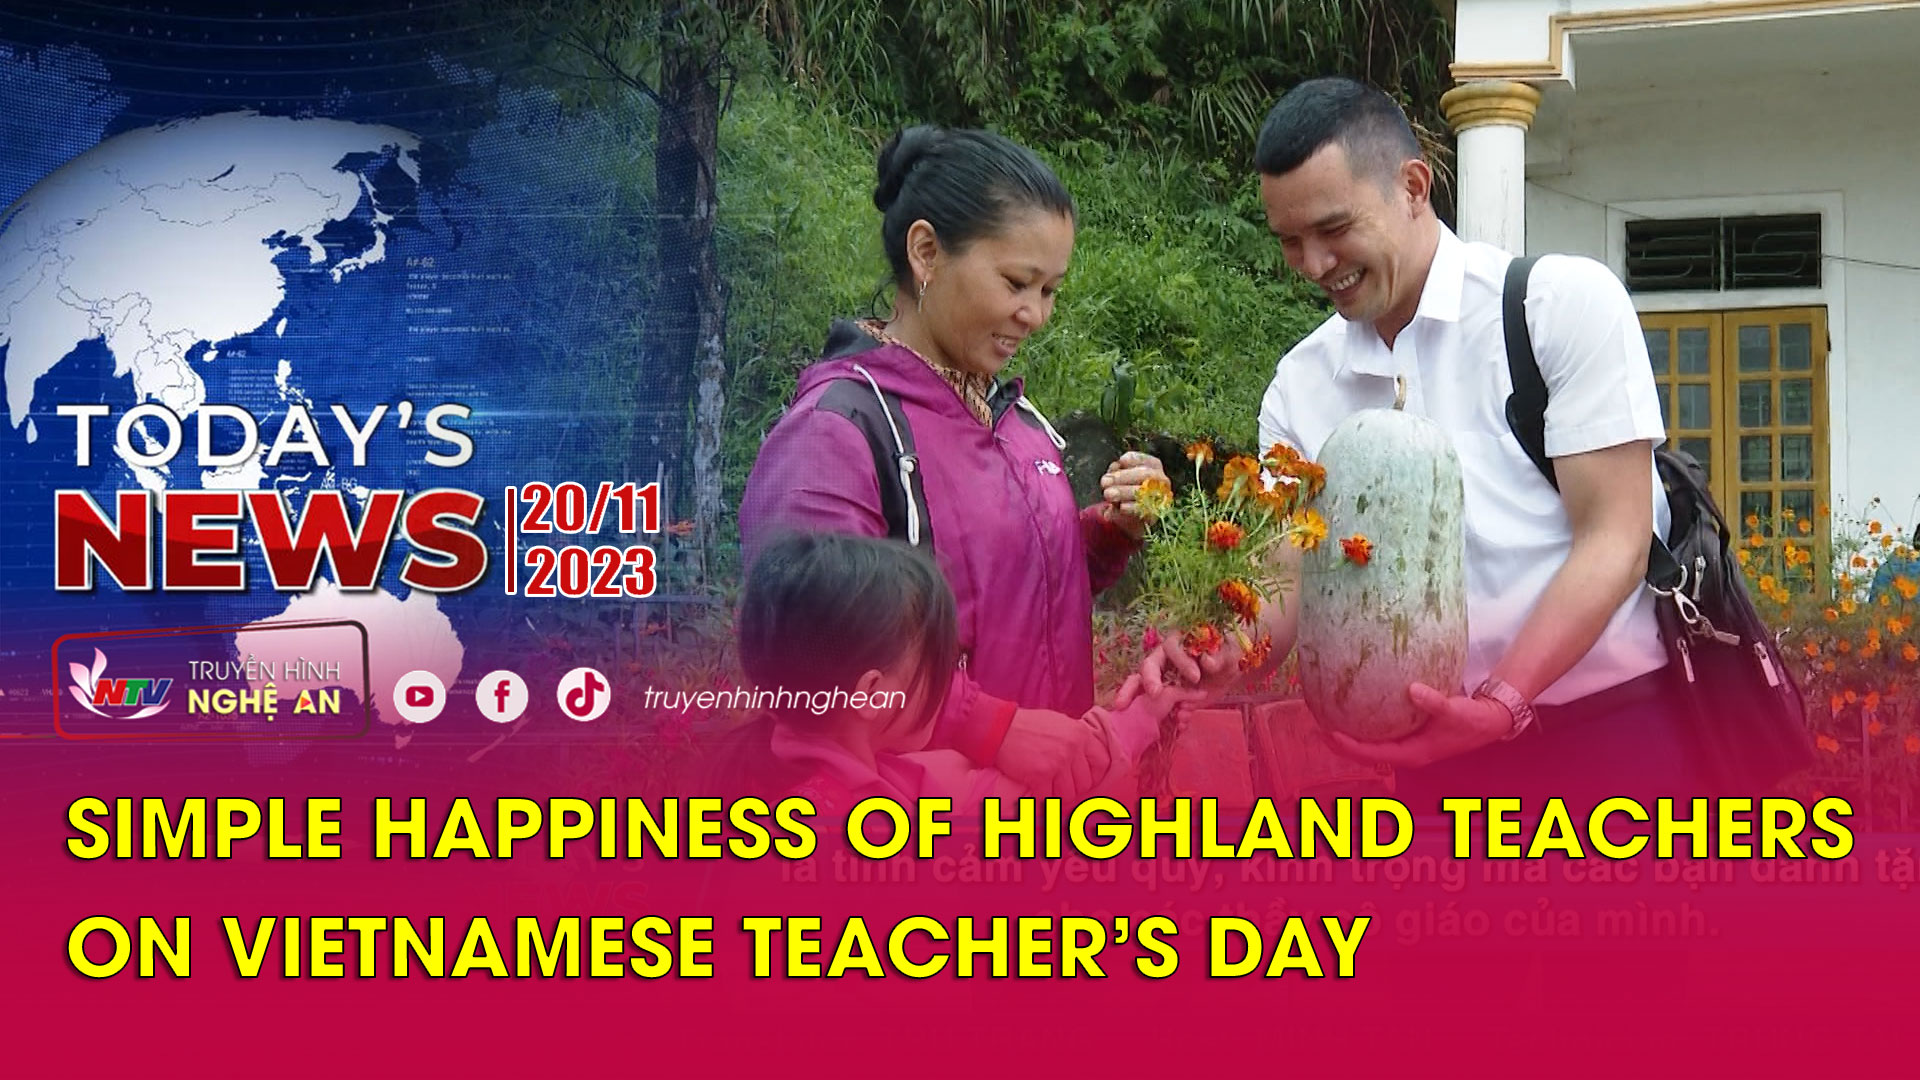 Today's News - 20/11/2023: Simple happiness of highland teachers on Vietnamese Teacher's Day